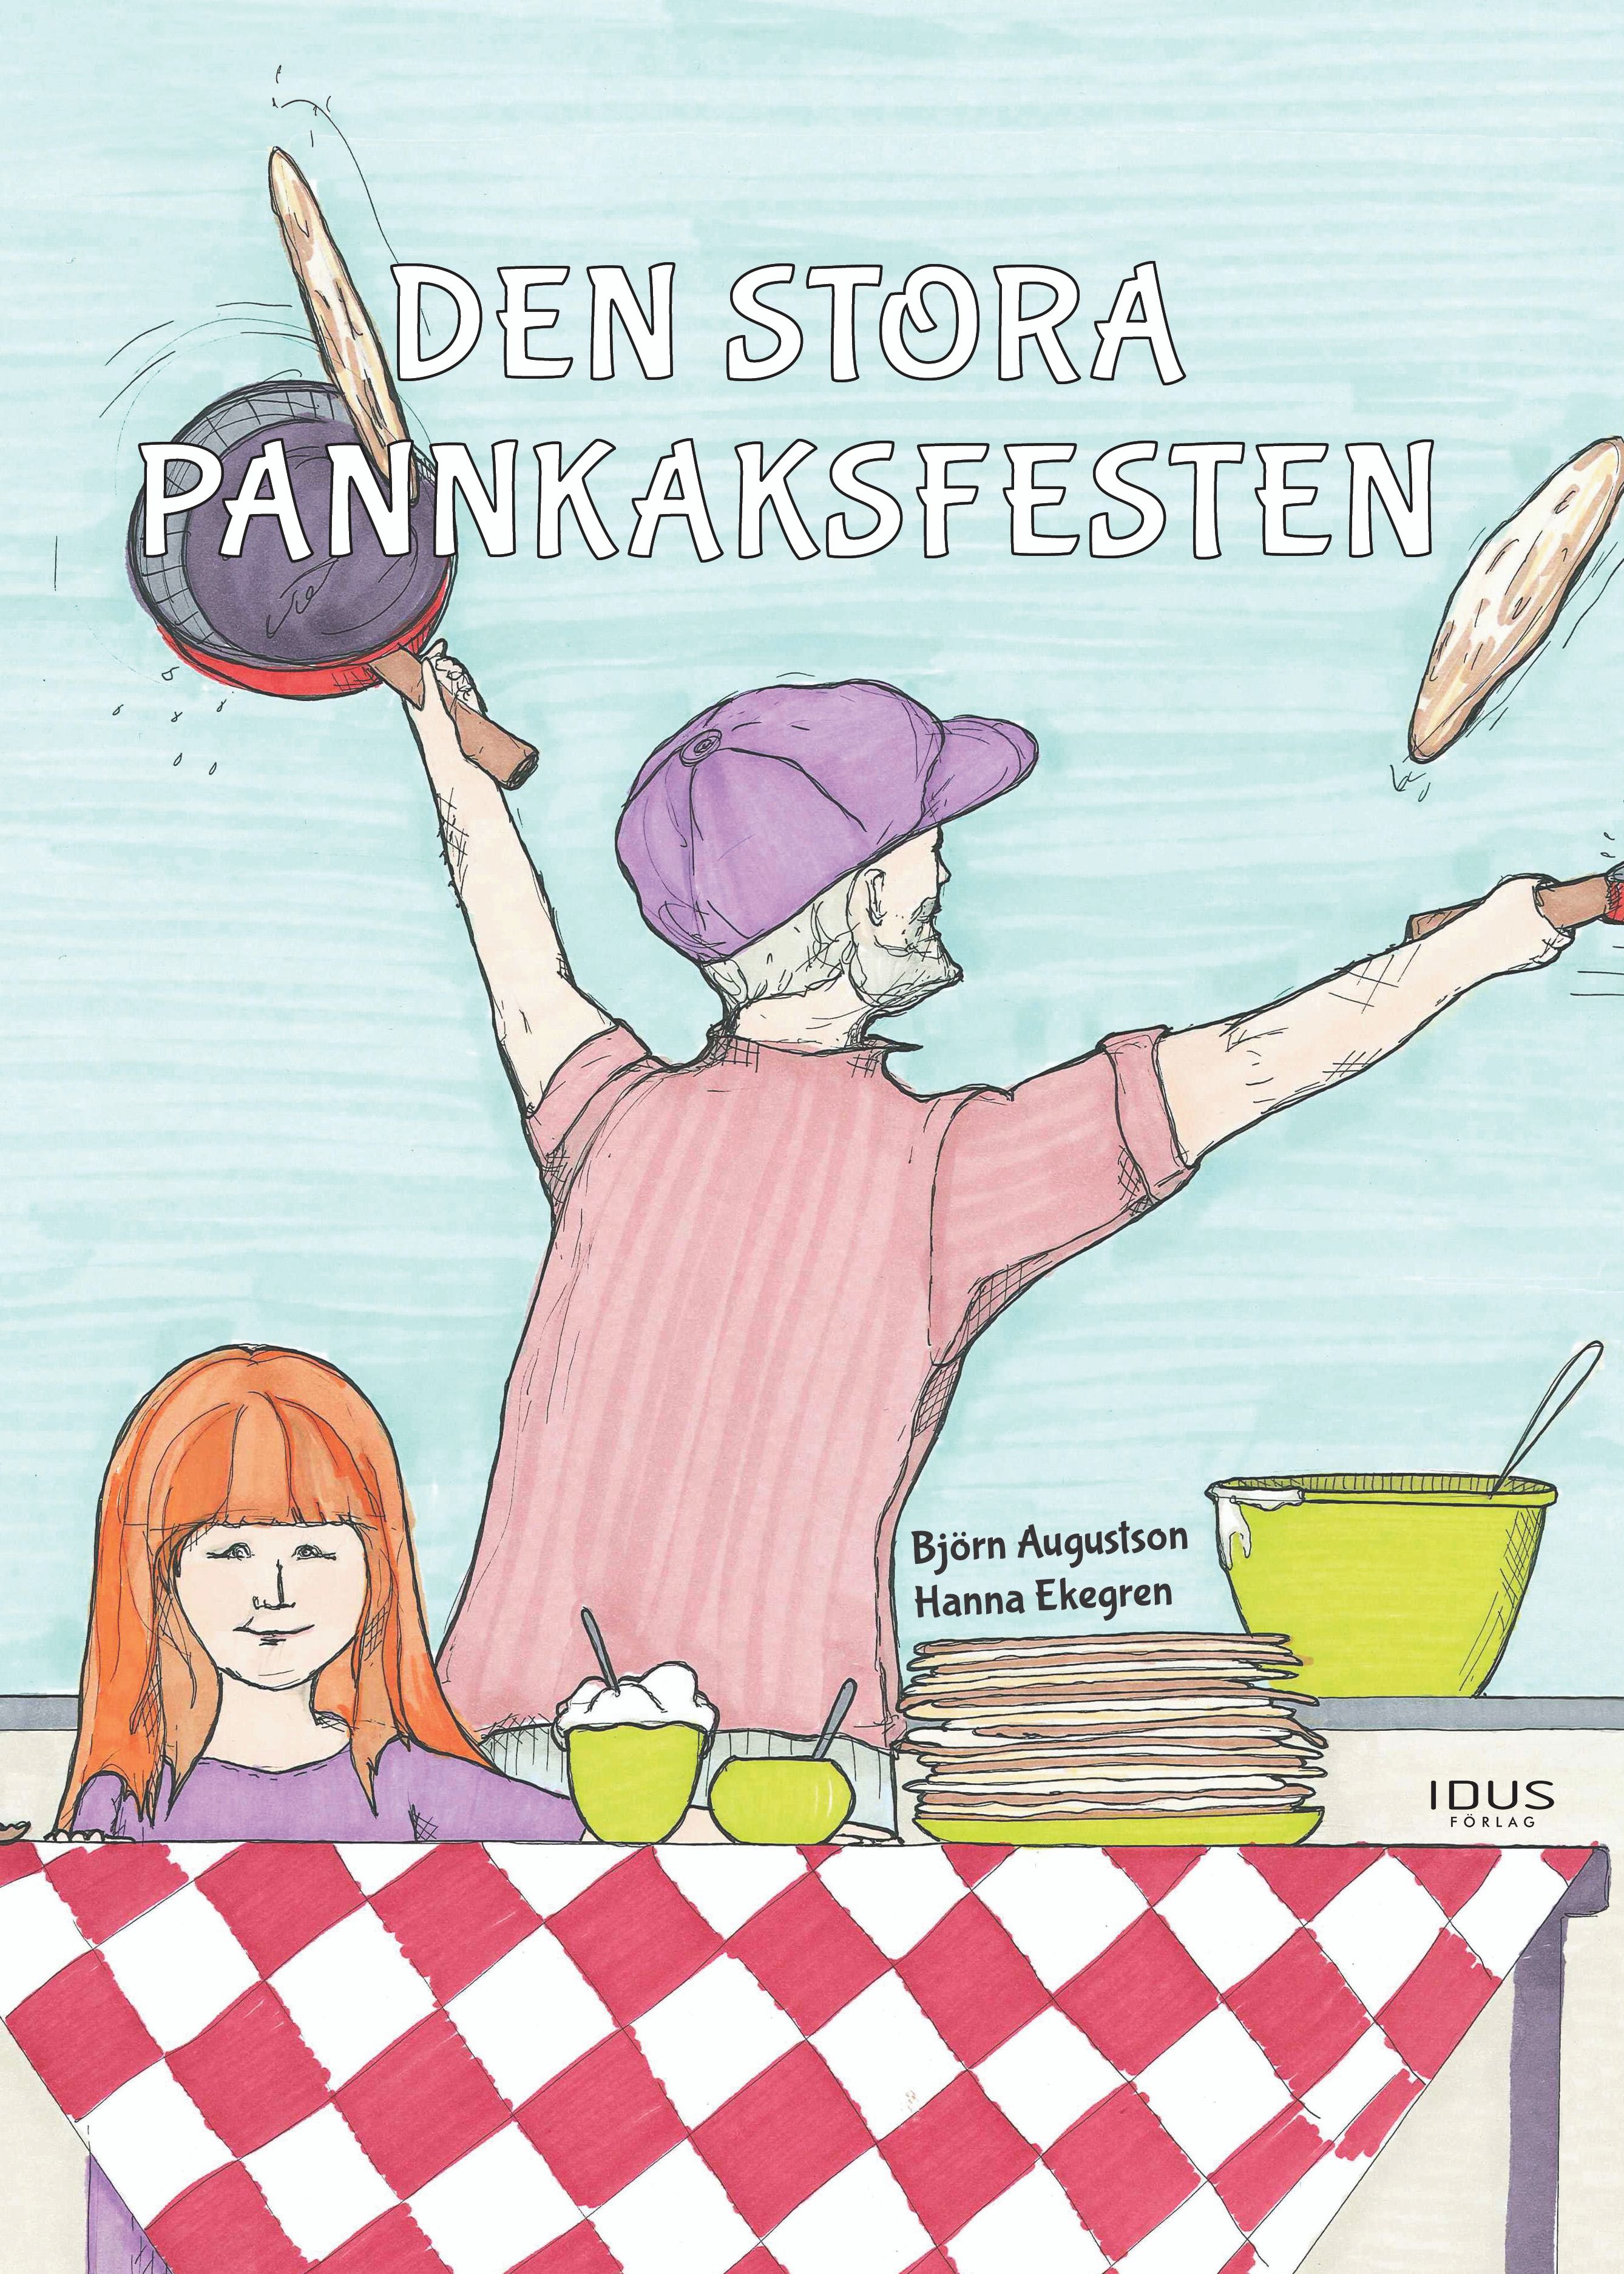 Den stora pannkaksfesten, eBook by Björn Augustson